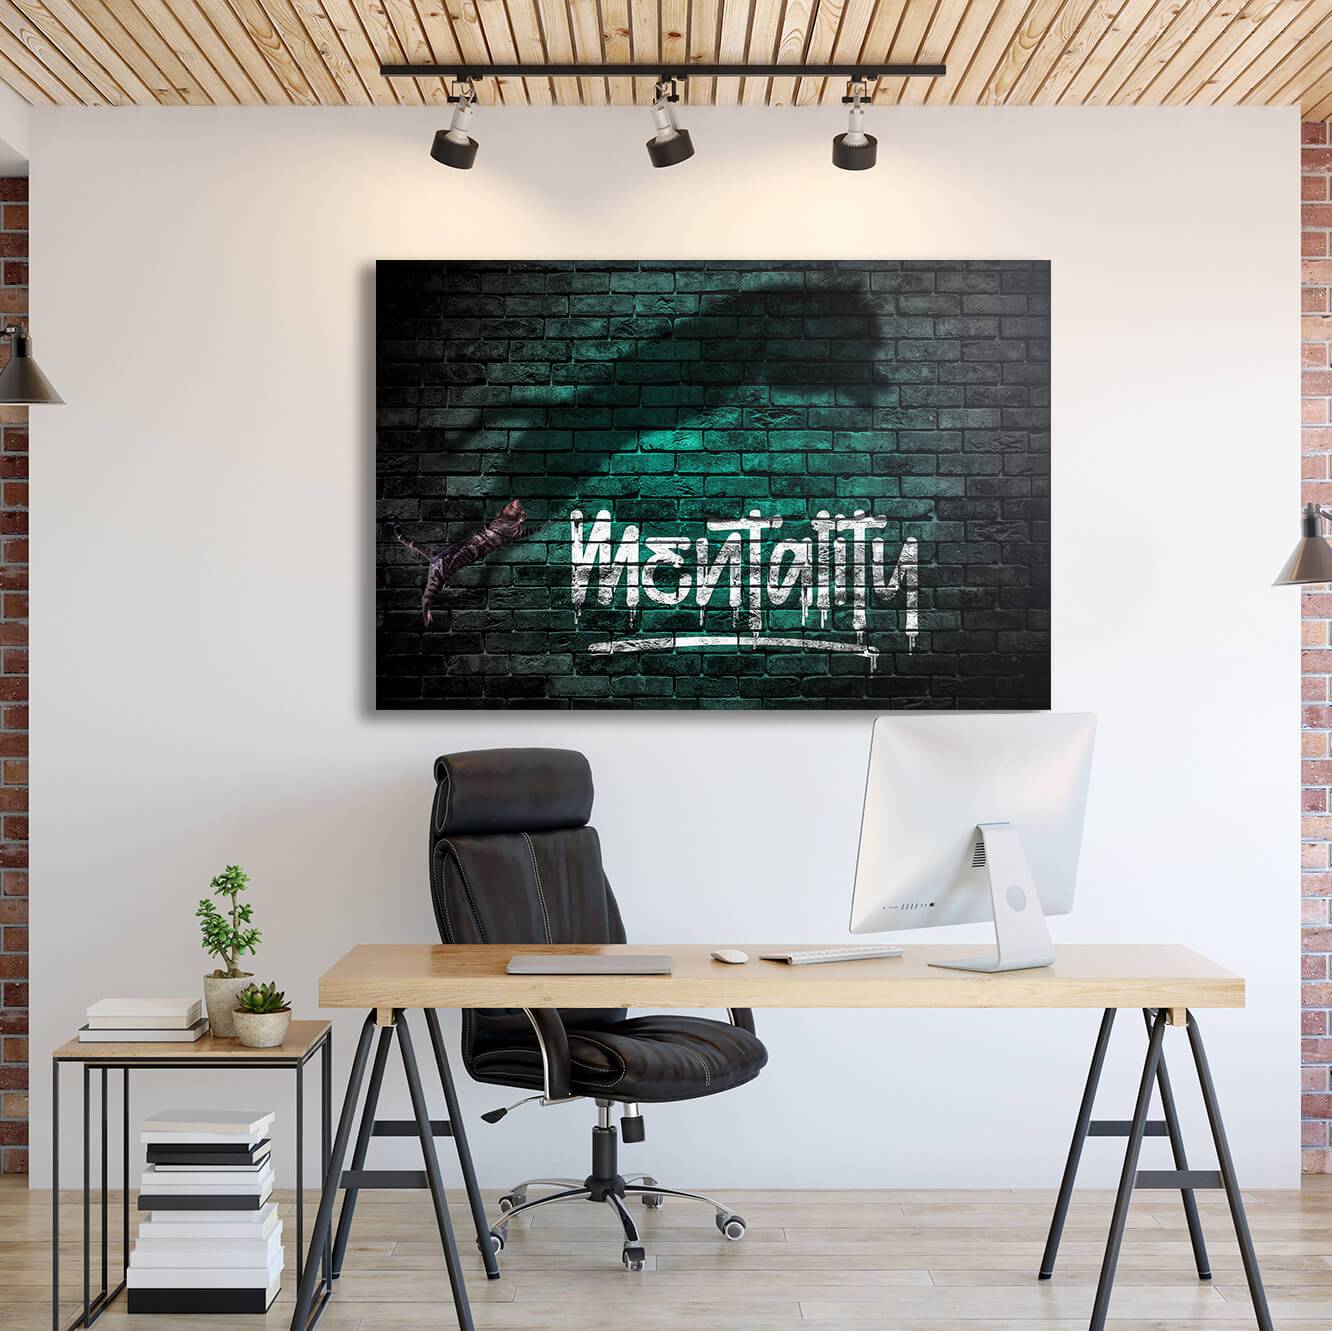 Cat Tiger Shadow - Mentality Wall Art | Inspirational Wall Art Motivational Wall Art Quotes Office Art | ImpaktMaker Exclusive Canvas Art Landscape